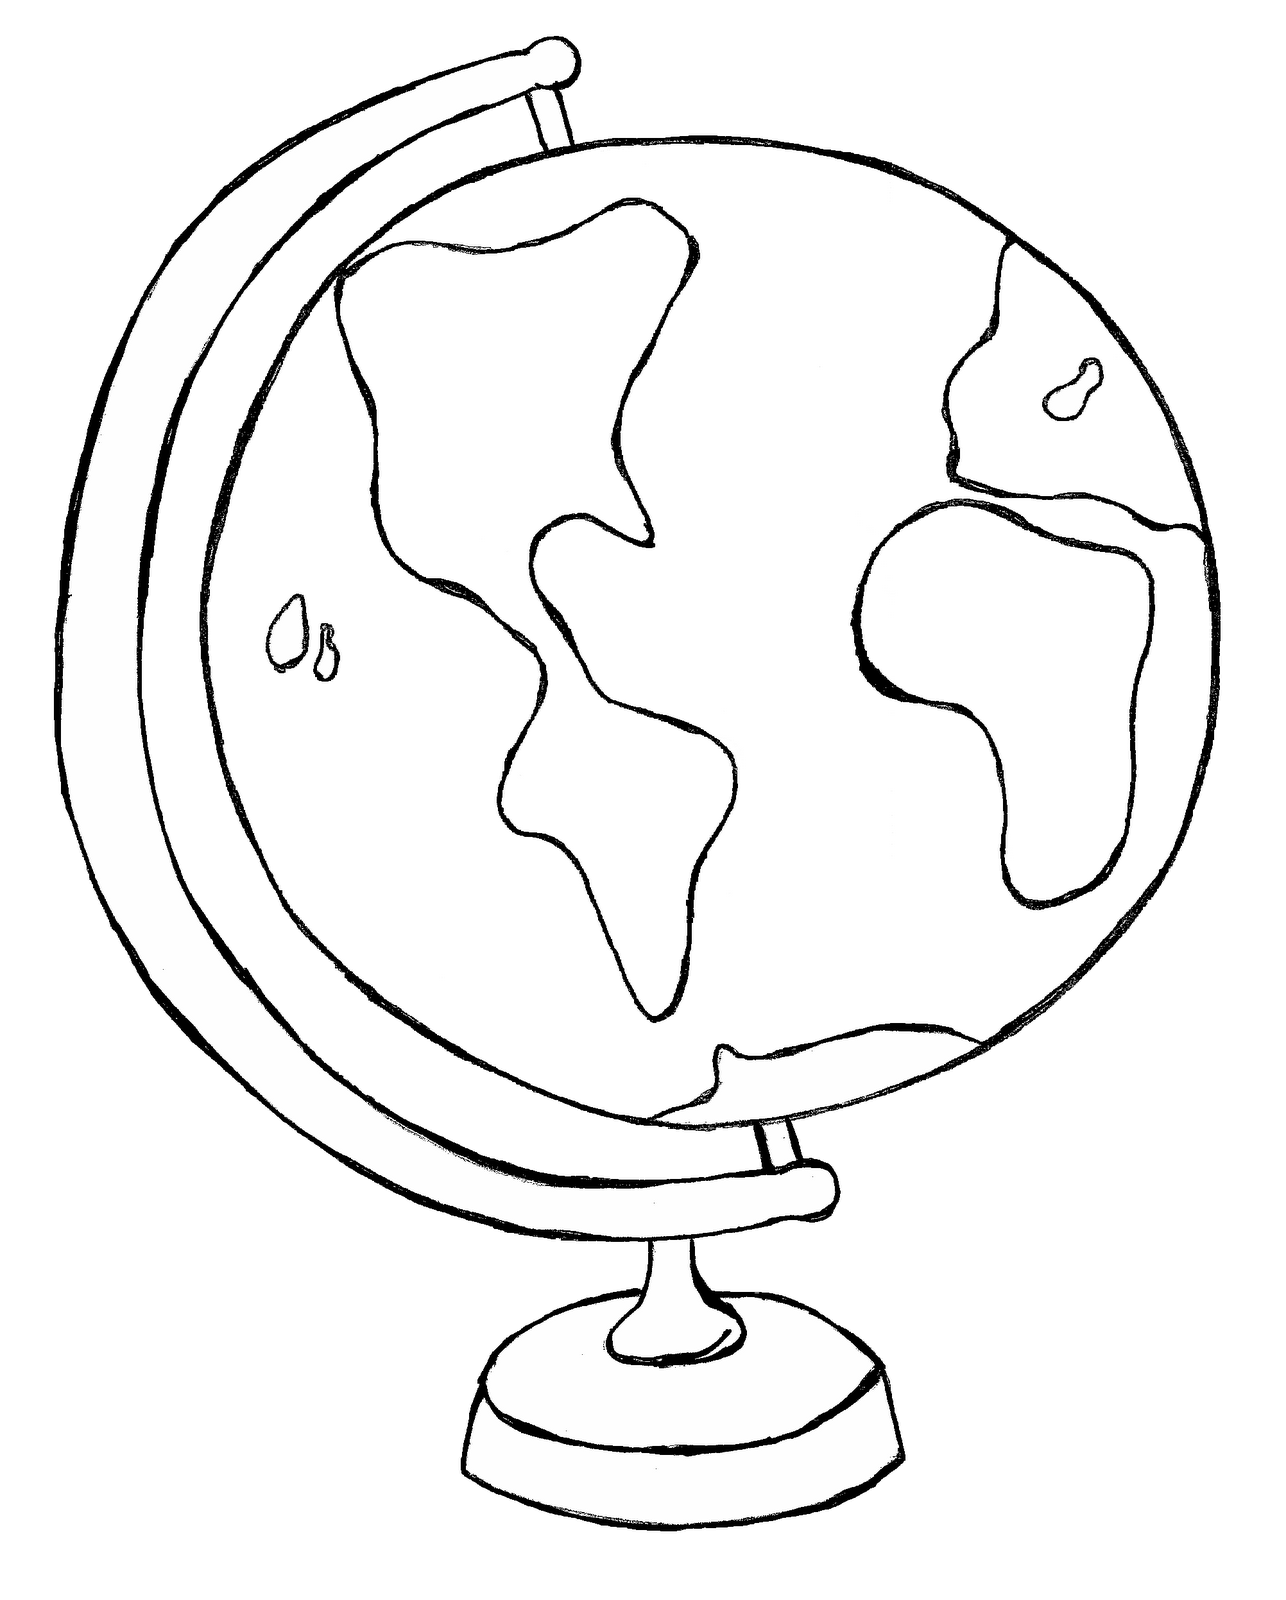 globe clipart doodle